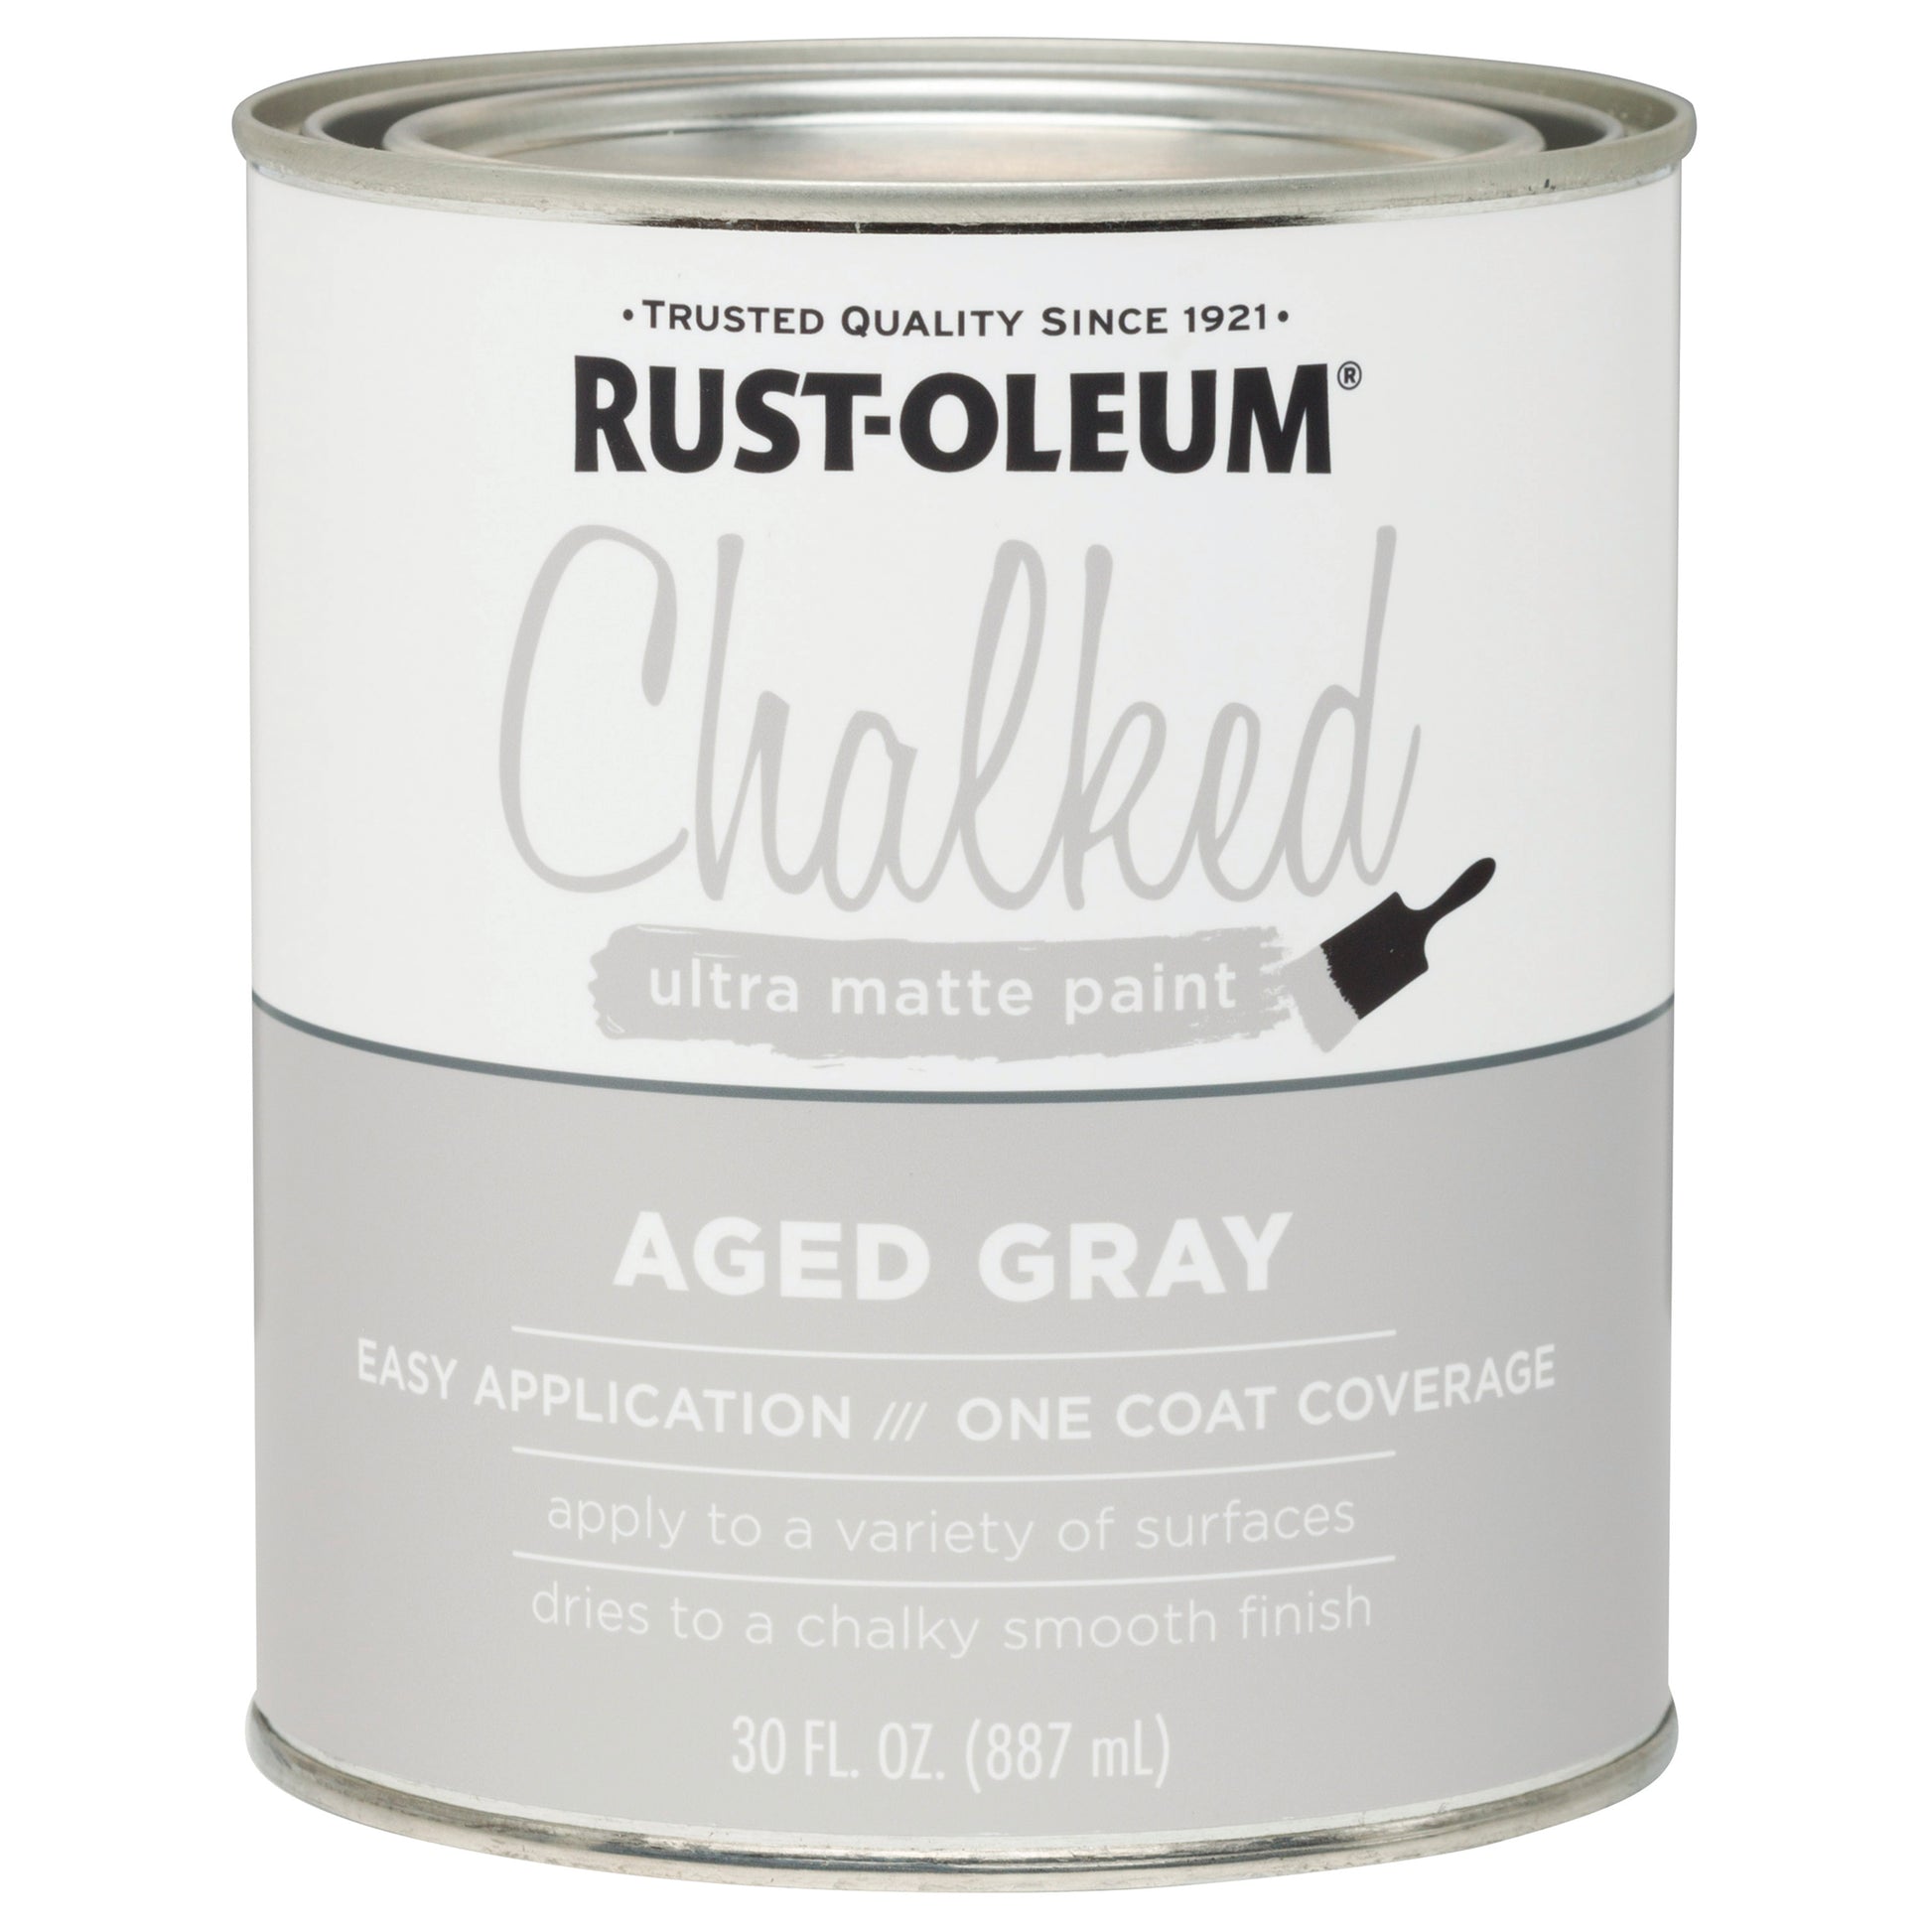 Rustoleum Chalked Paint Aged Gray alt 0